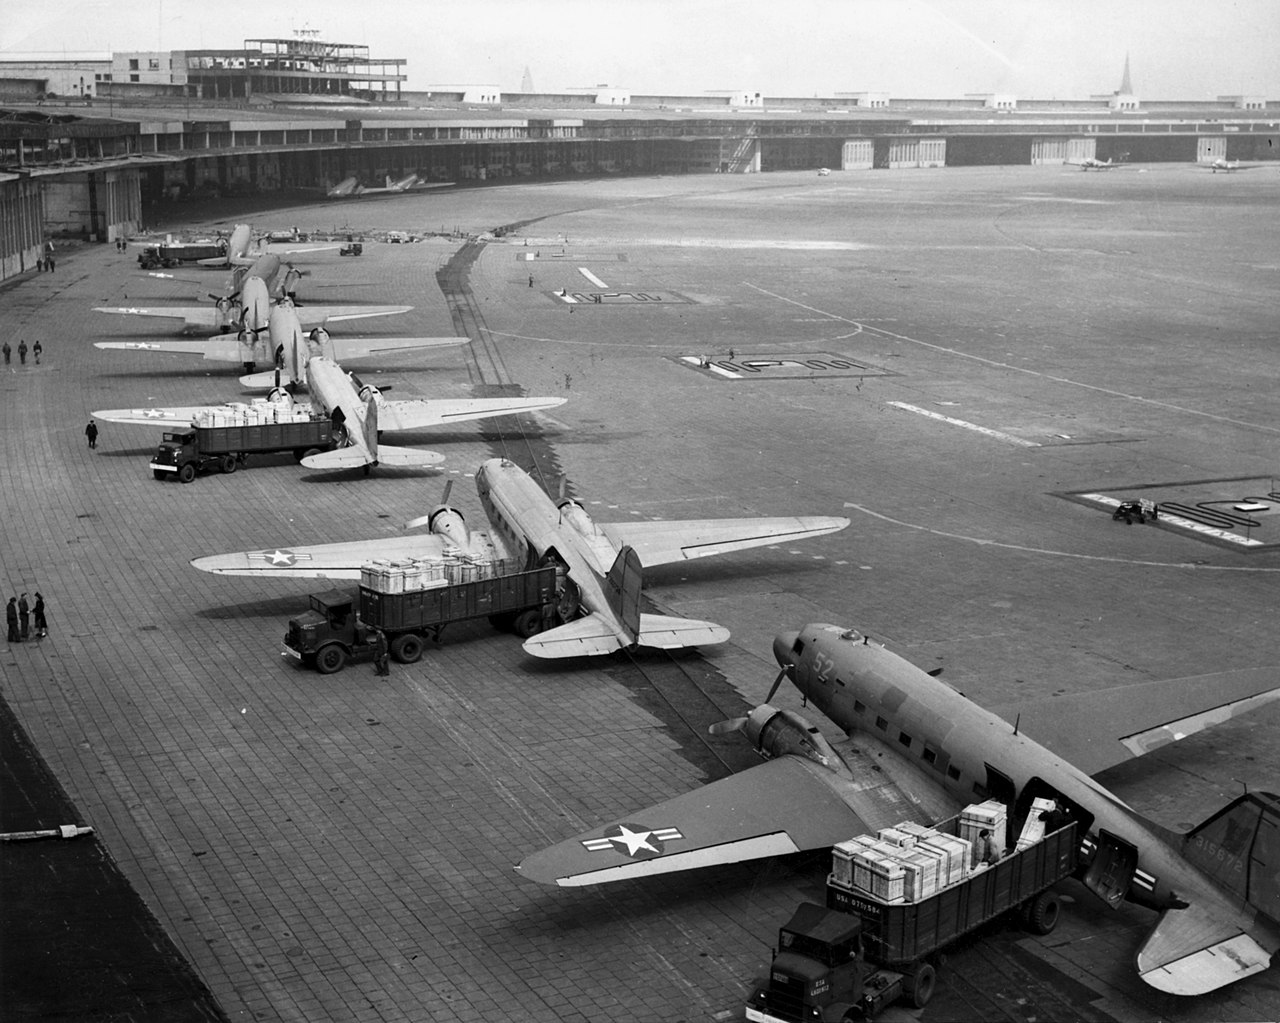 1280px-C-47s_at_Tempelhof_Airport_Berlin_1948.jpg